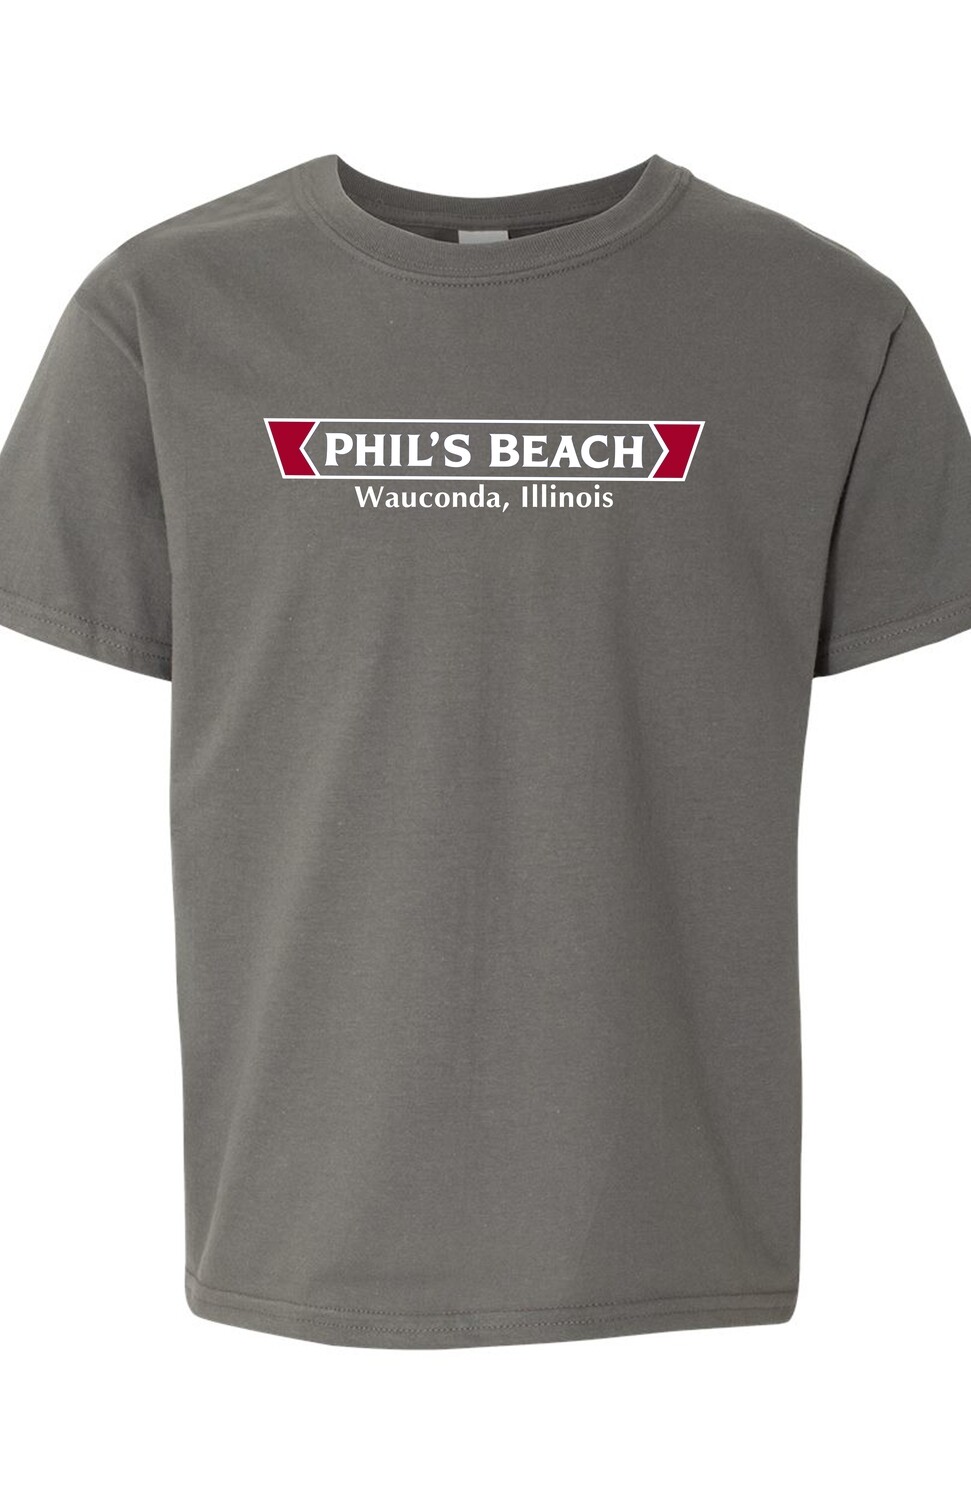 Phil's Beach Youth T-shirt